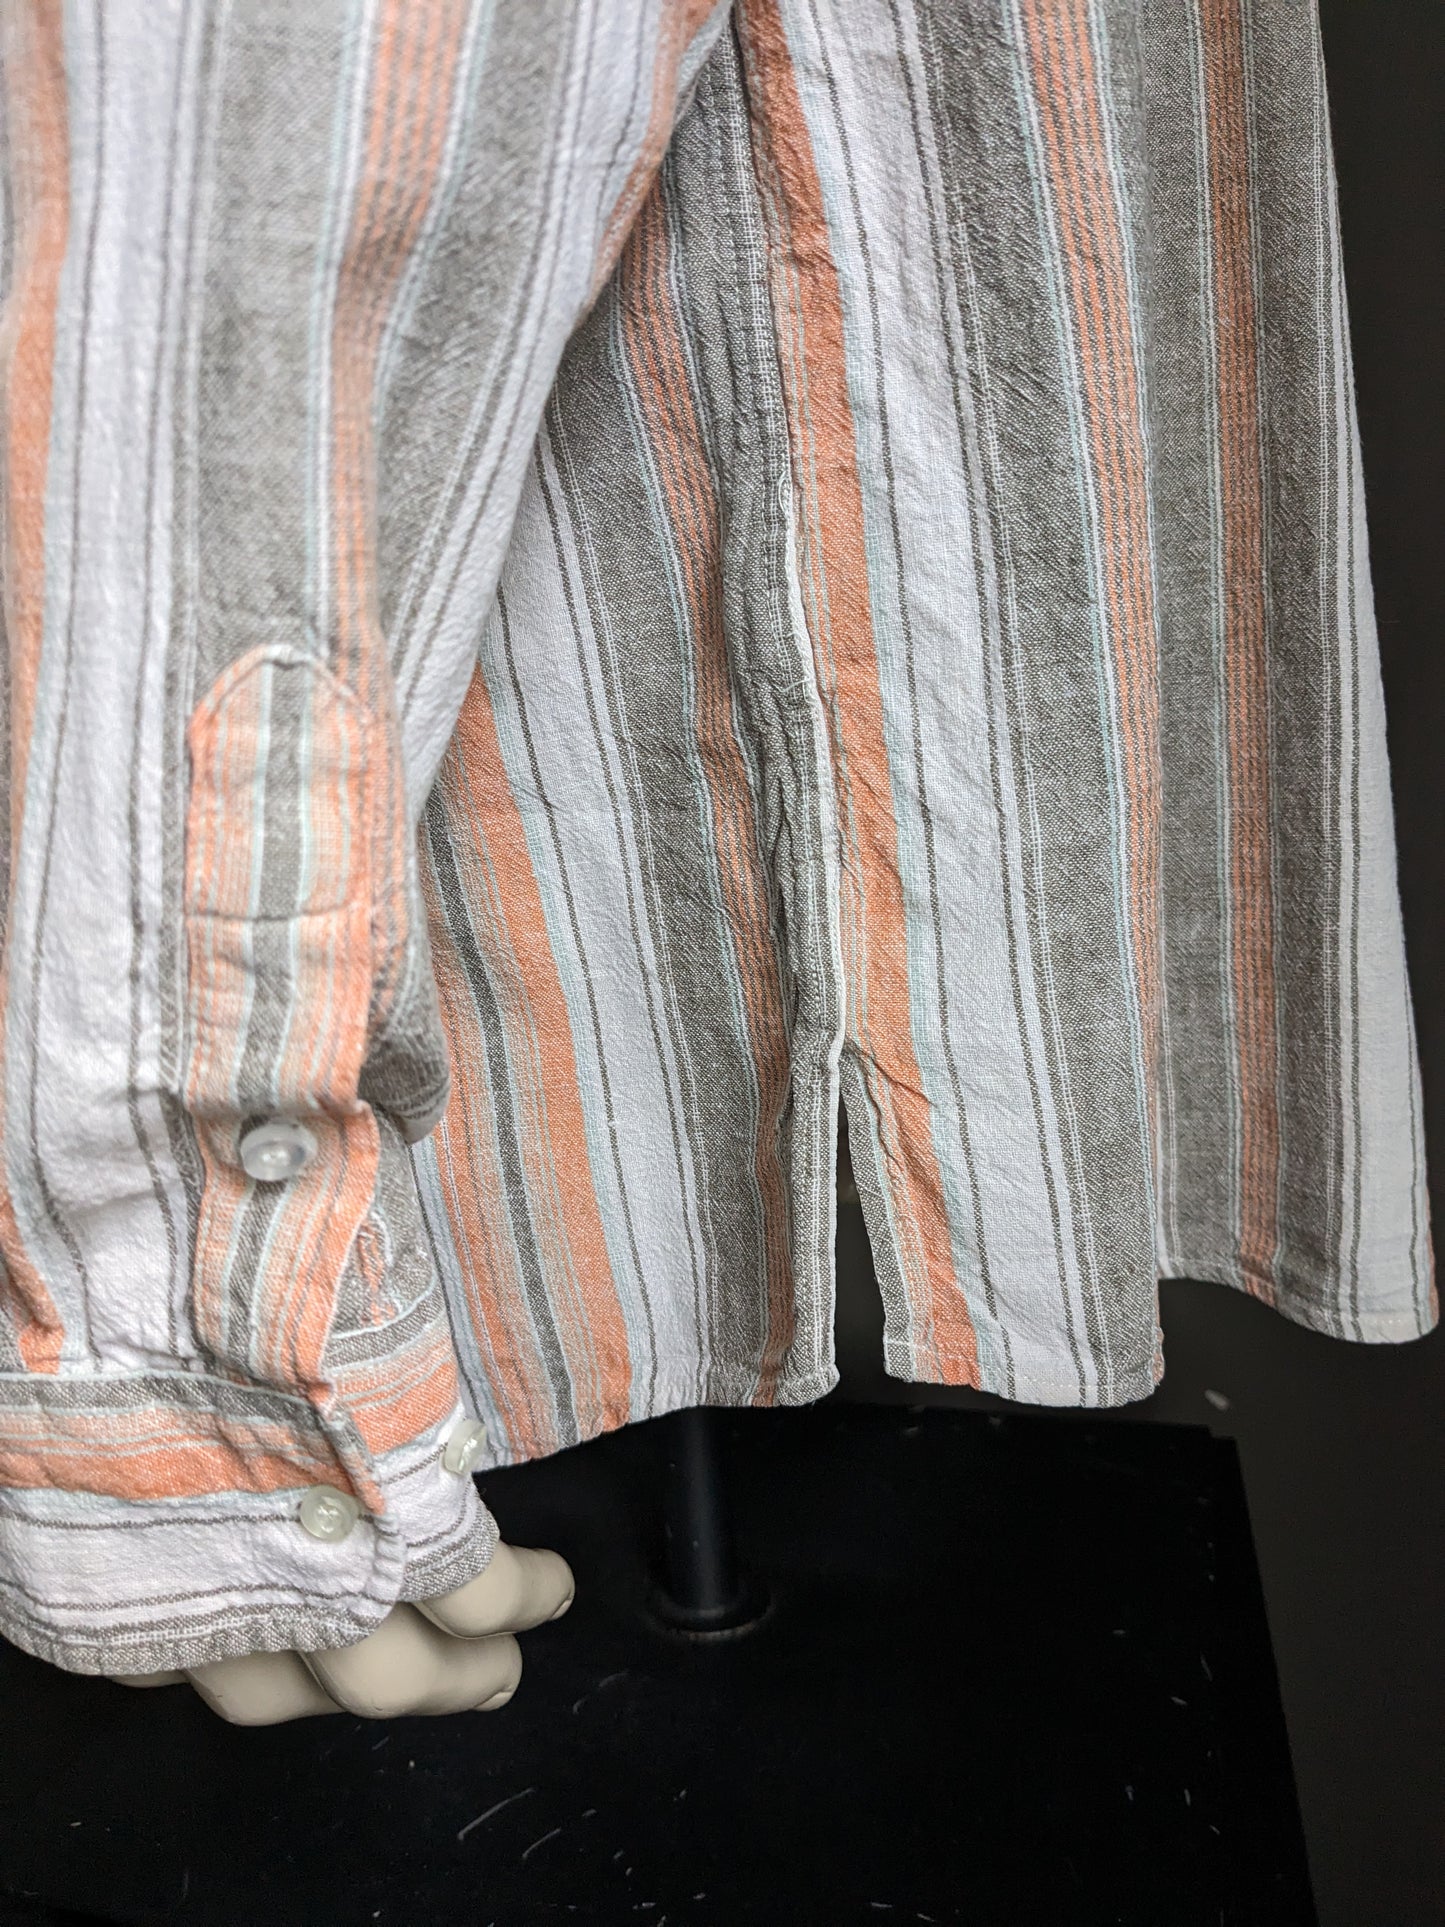 Suéter / camisa de polo GW vintage con collar elevado / agricultores / mao. Naranja gris rayada. 55% de lino. Tamaño xxl.